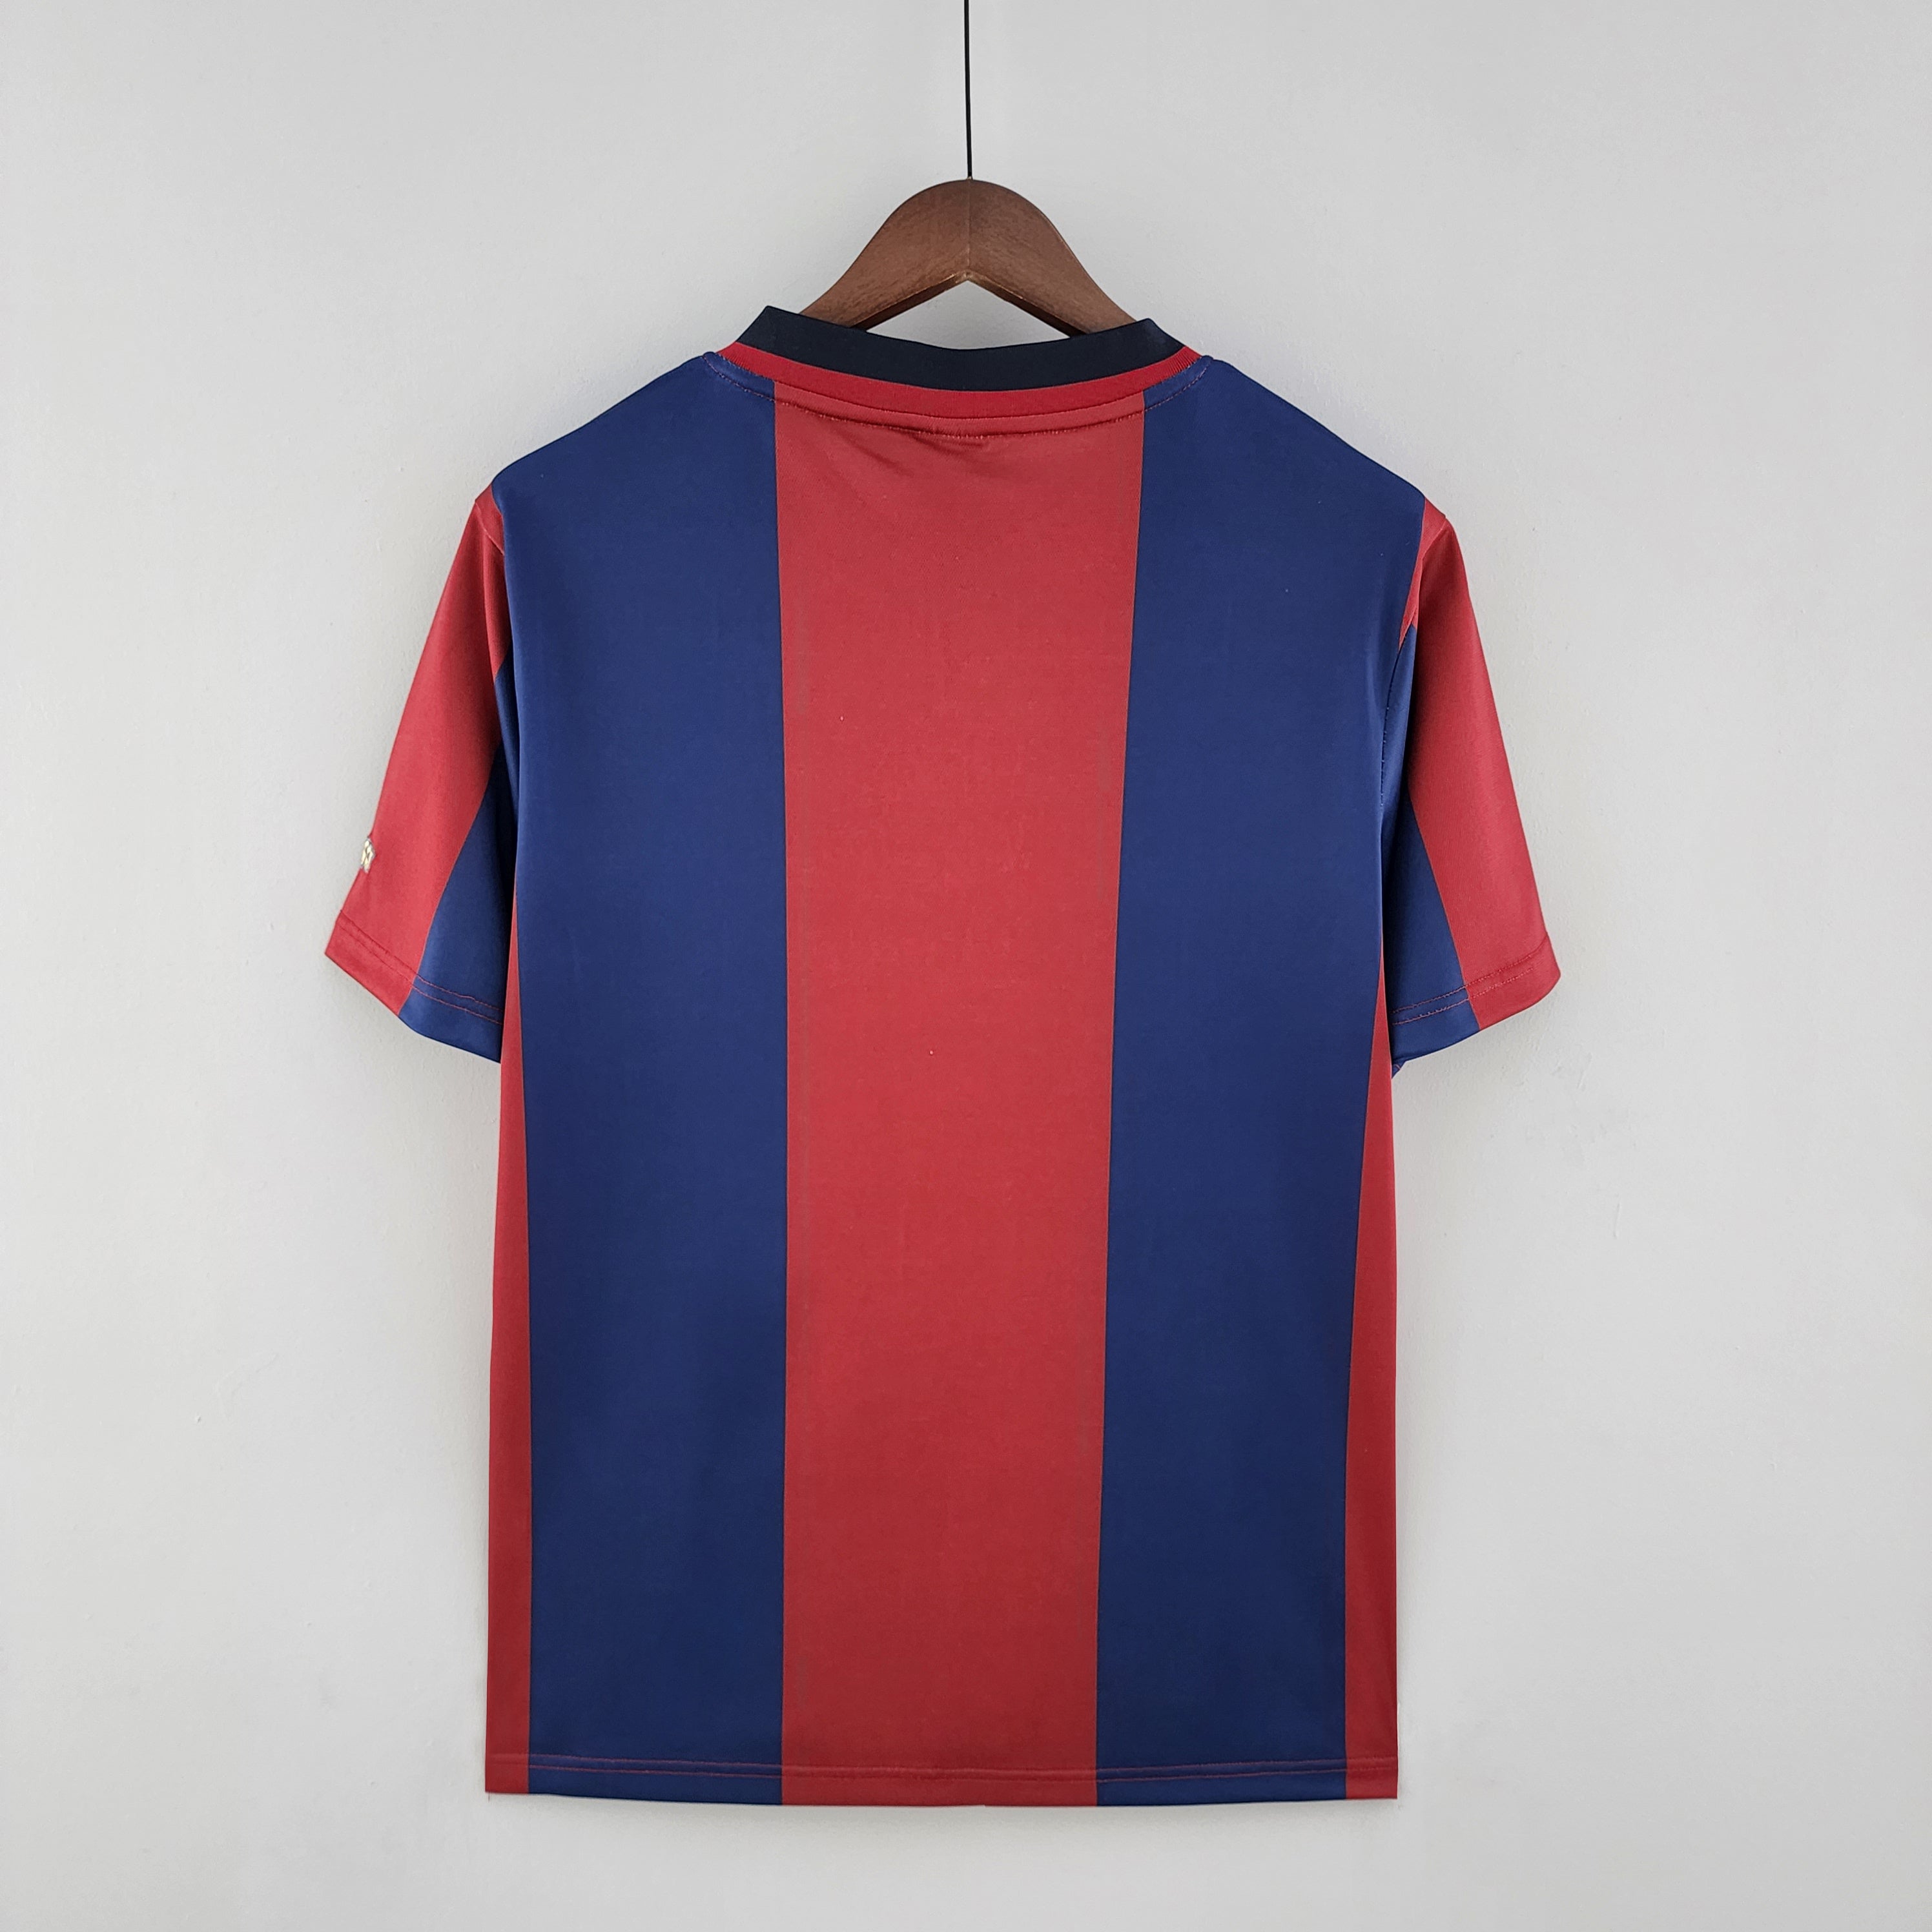 FC Barcelona 1998-99 Home Jersey